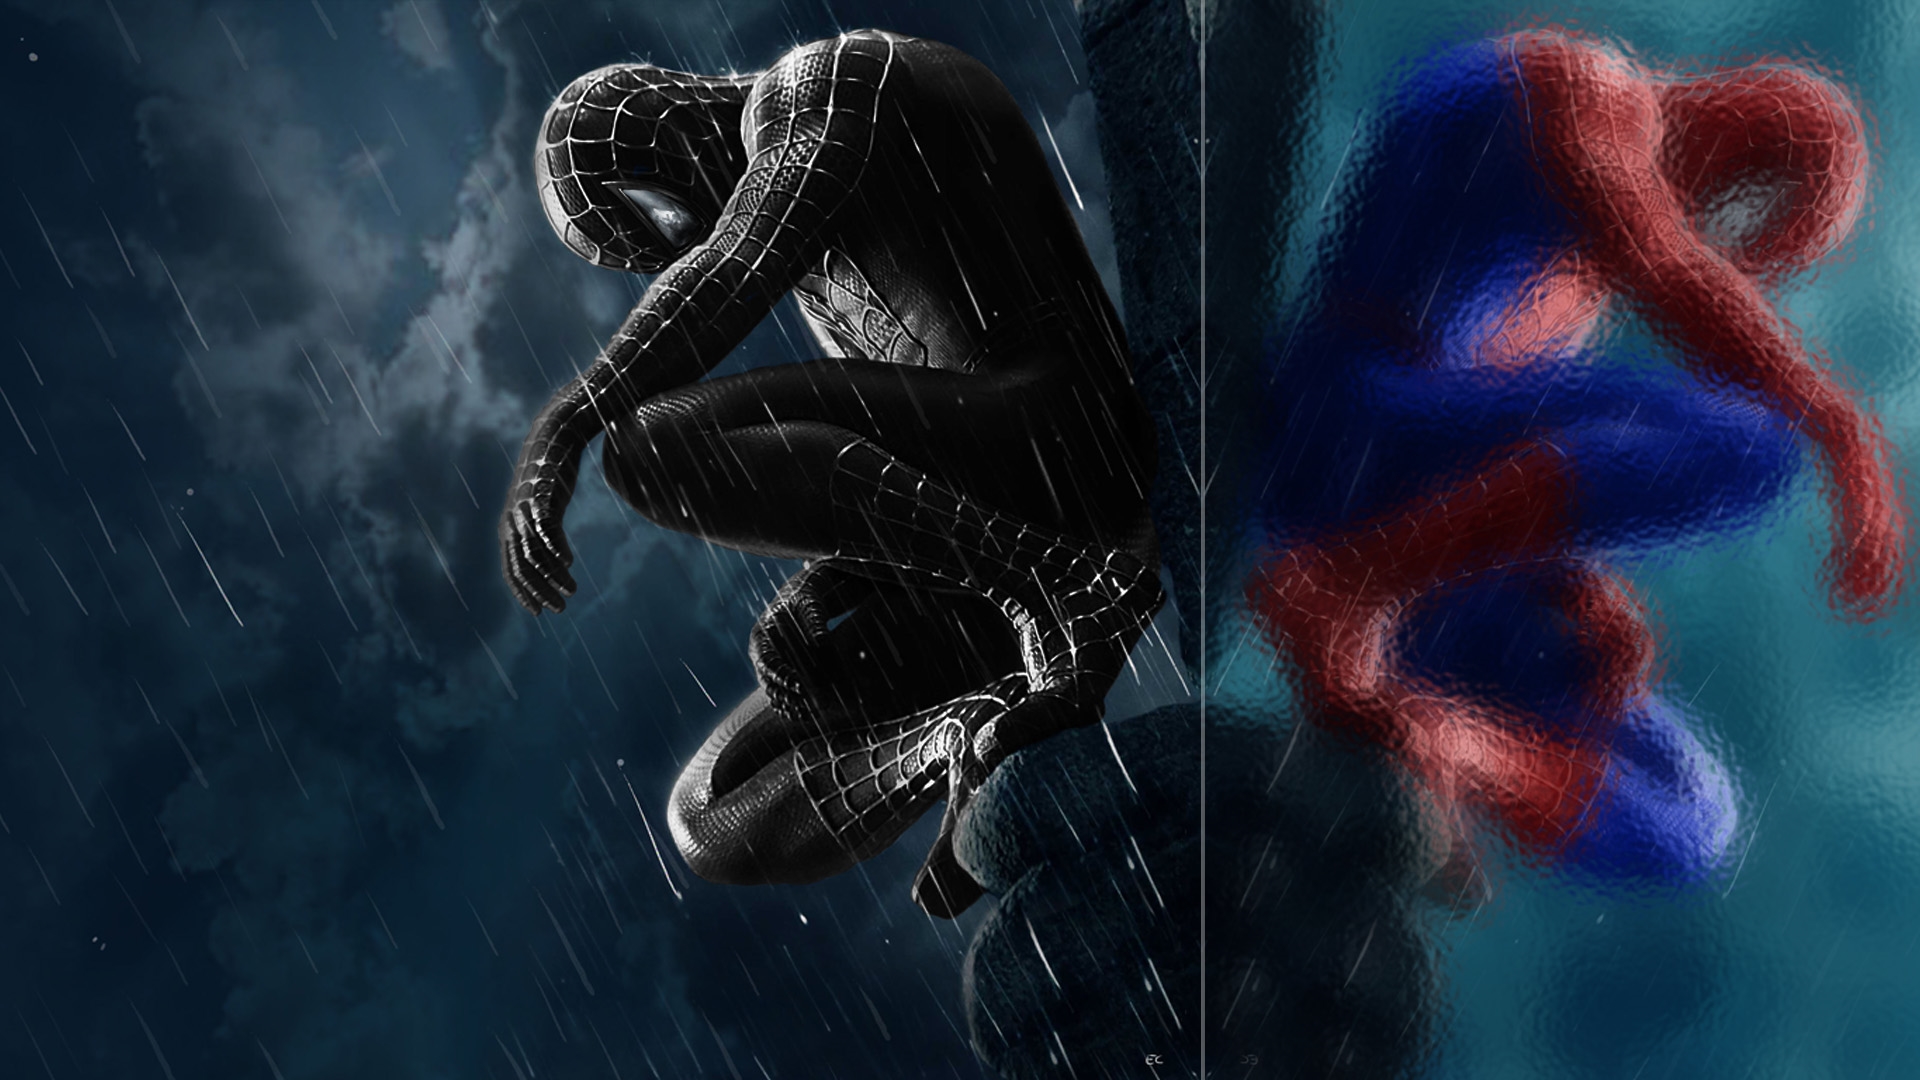  Spiderman  Images Free Download PixelsTalk Net